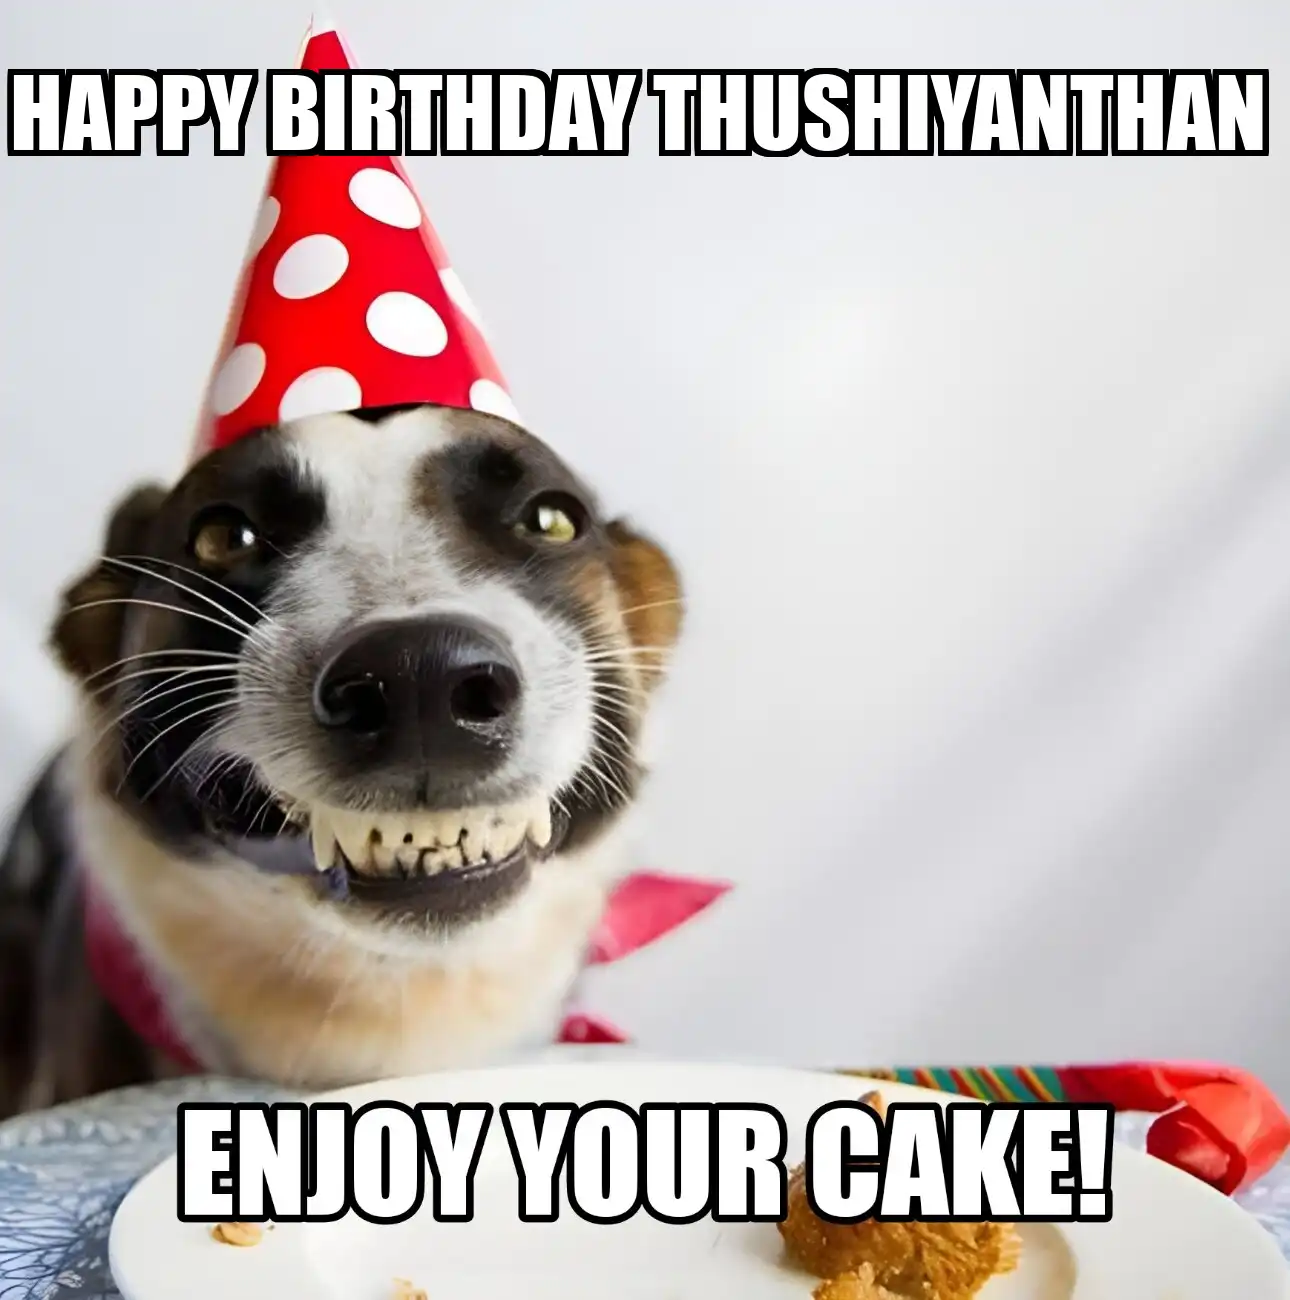 Happy Birthday Thushiyanthan Enjoy Your Cake Dog Meme